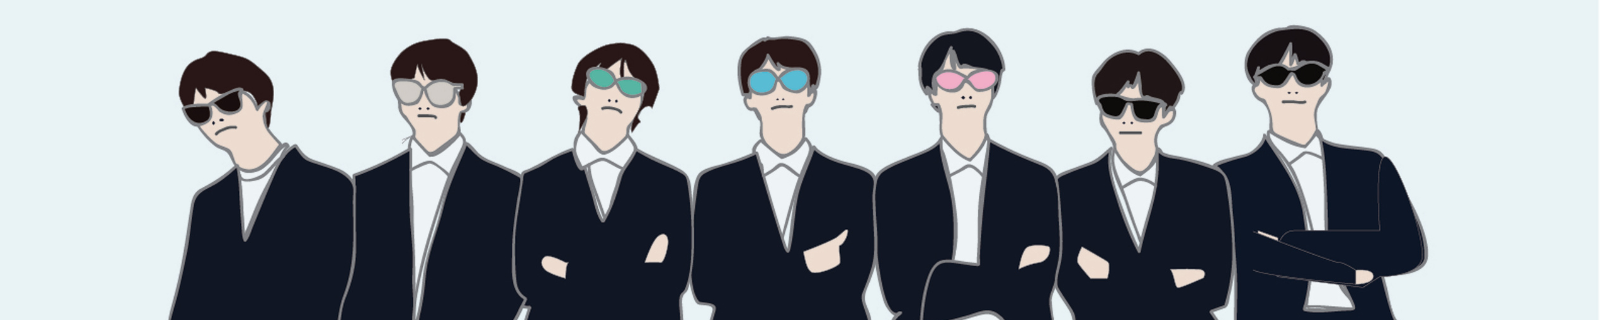 Illustration of BTS kpop band